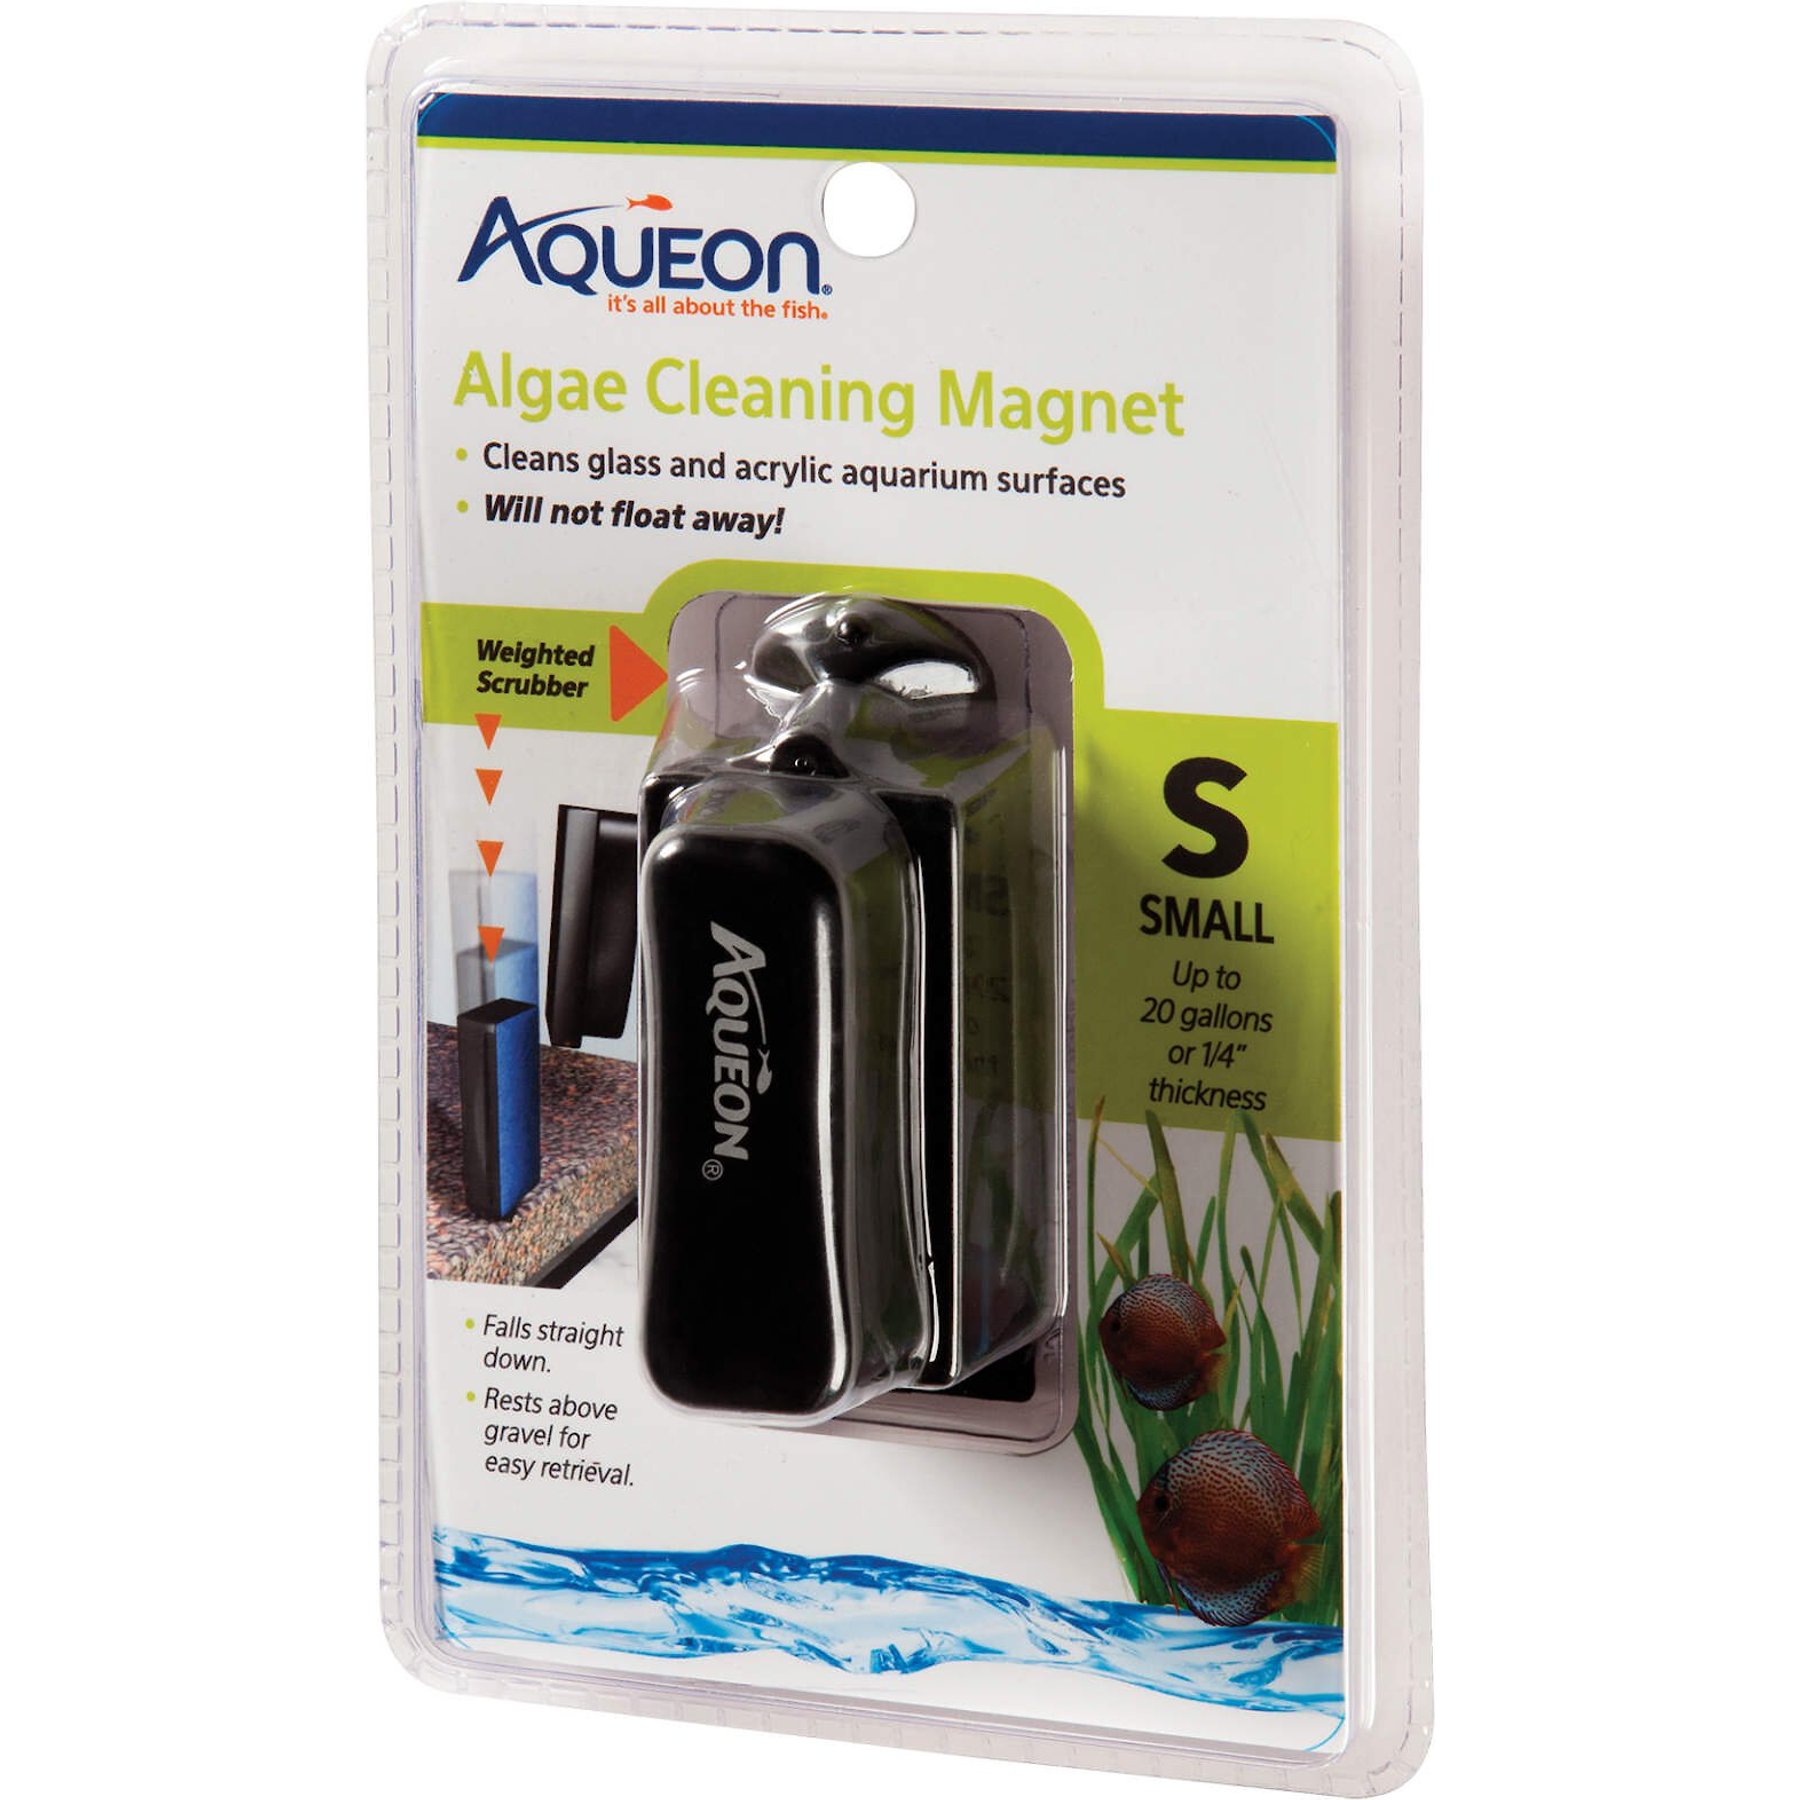 AQUEON, Algae Cleaning Magnet, Small